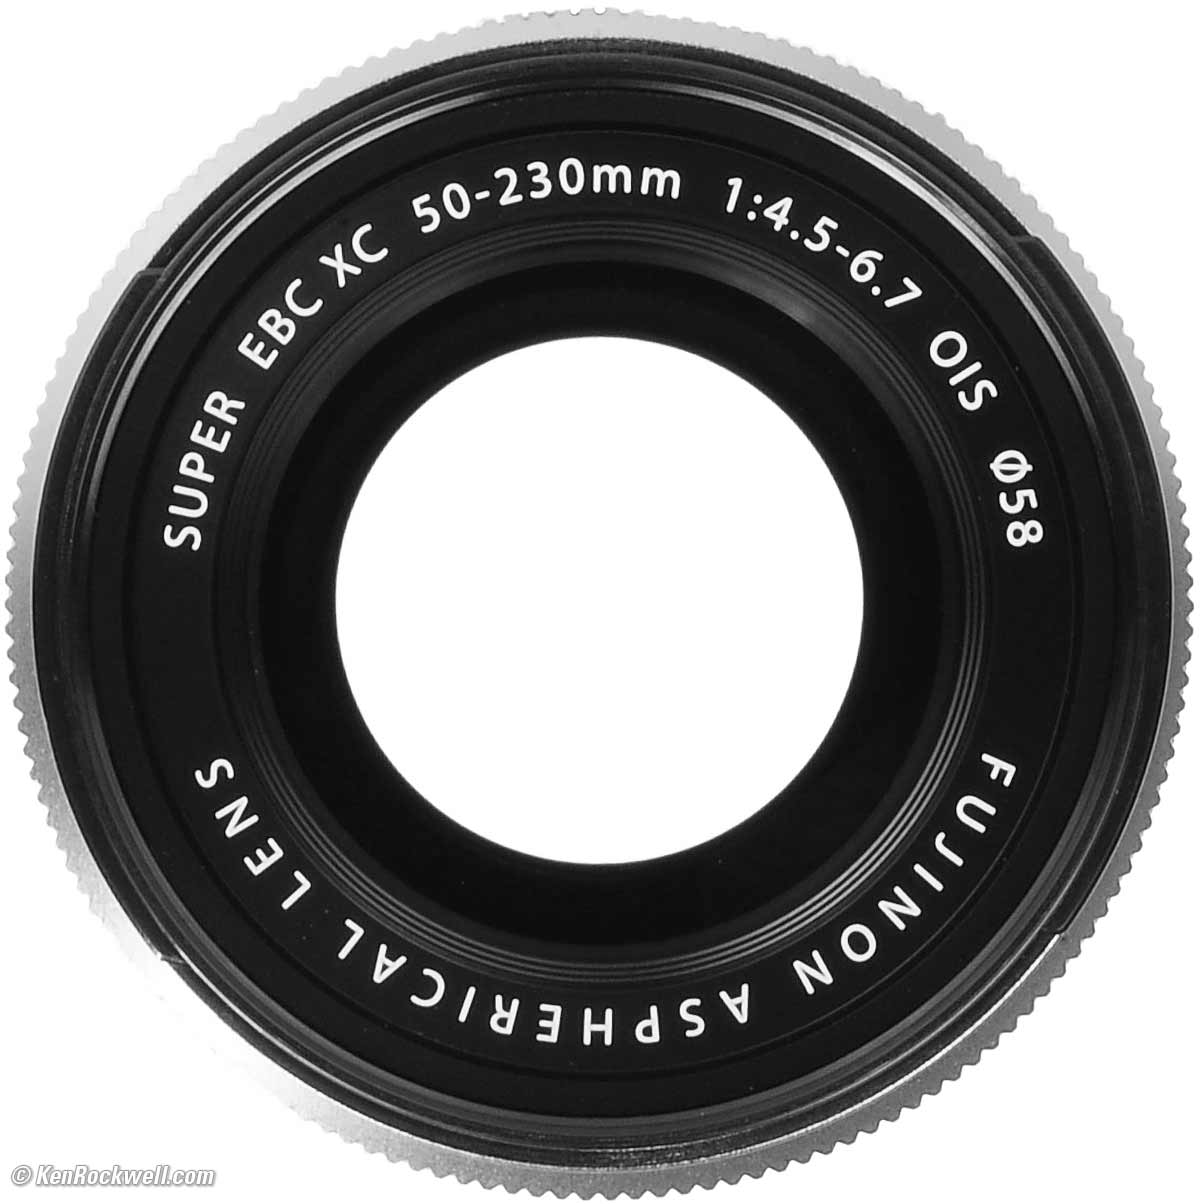 Fujifilm 50-230mm Review